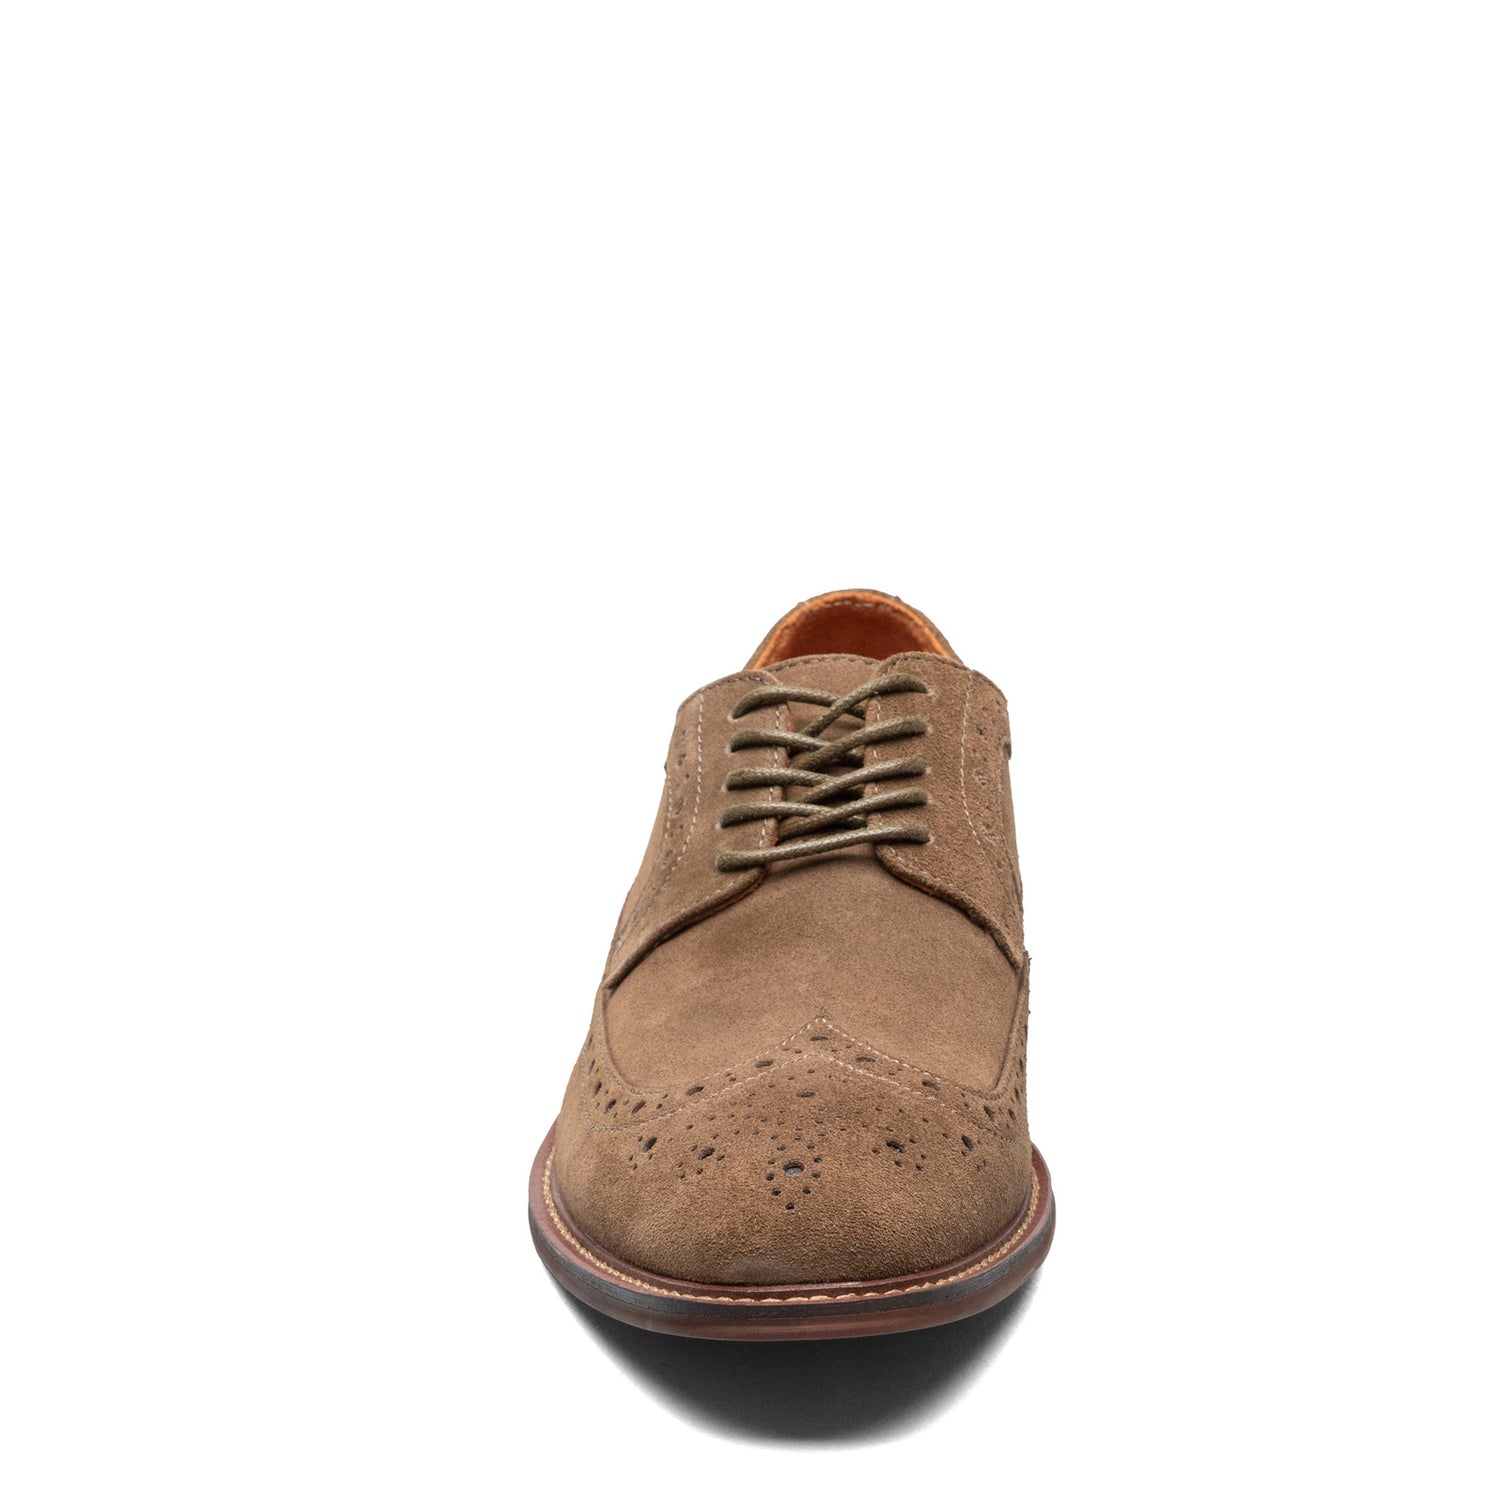 Peltz Shoes  Men's Stacy Adams Marligan Wingtip Oxford Mocha 25616-216